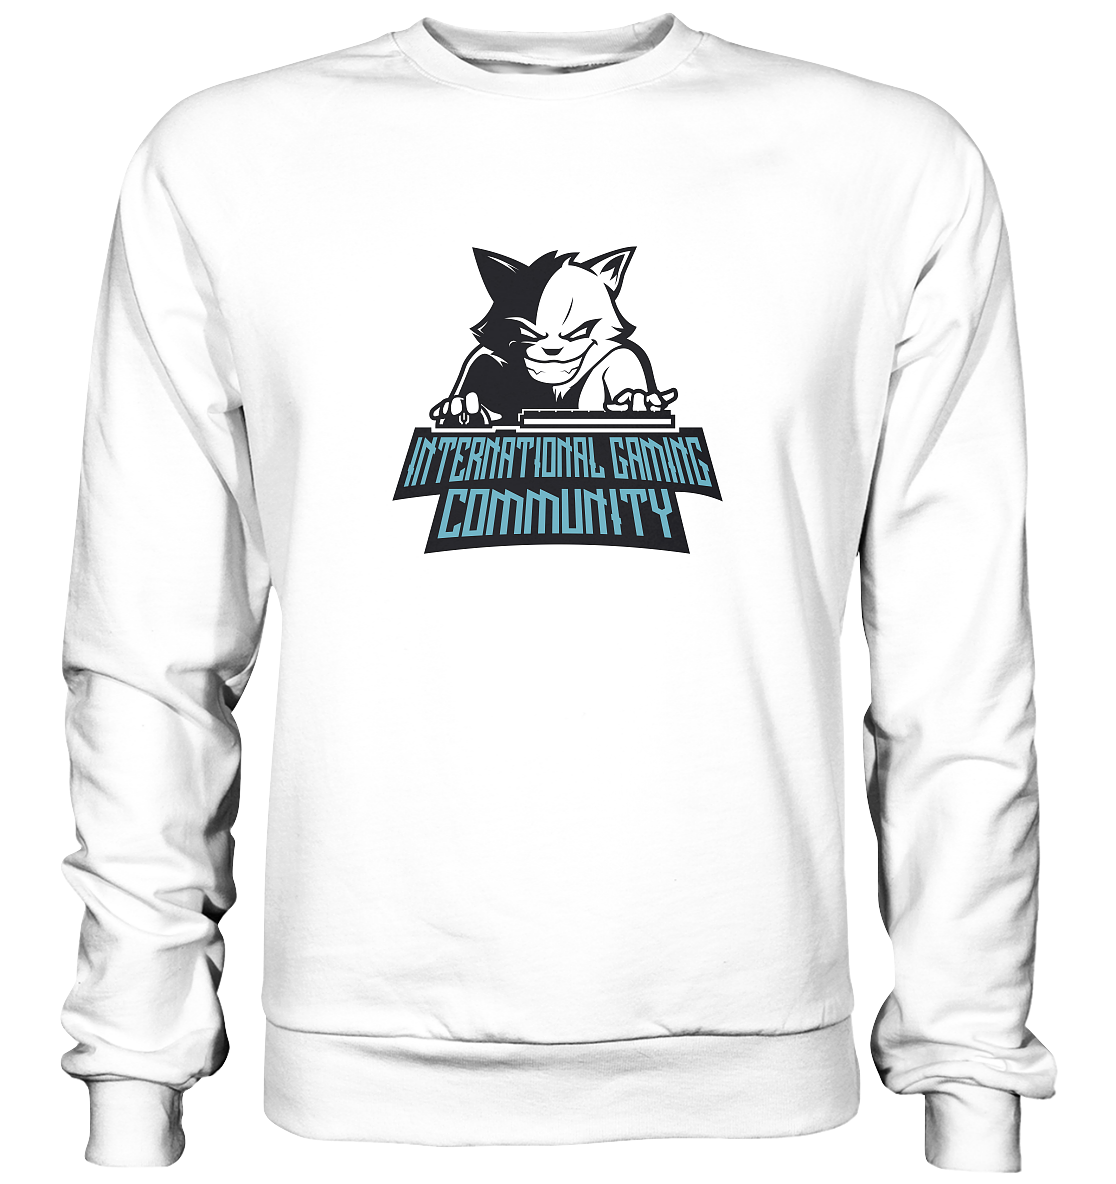 INTERNATIONAL GAMING COMMUNITY - Basic Sweatshirt